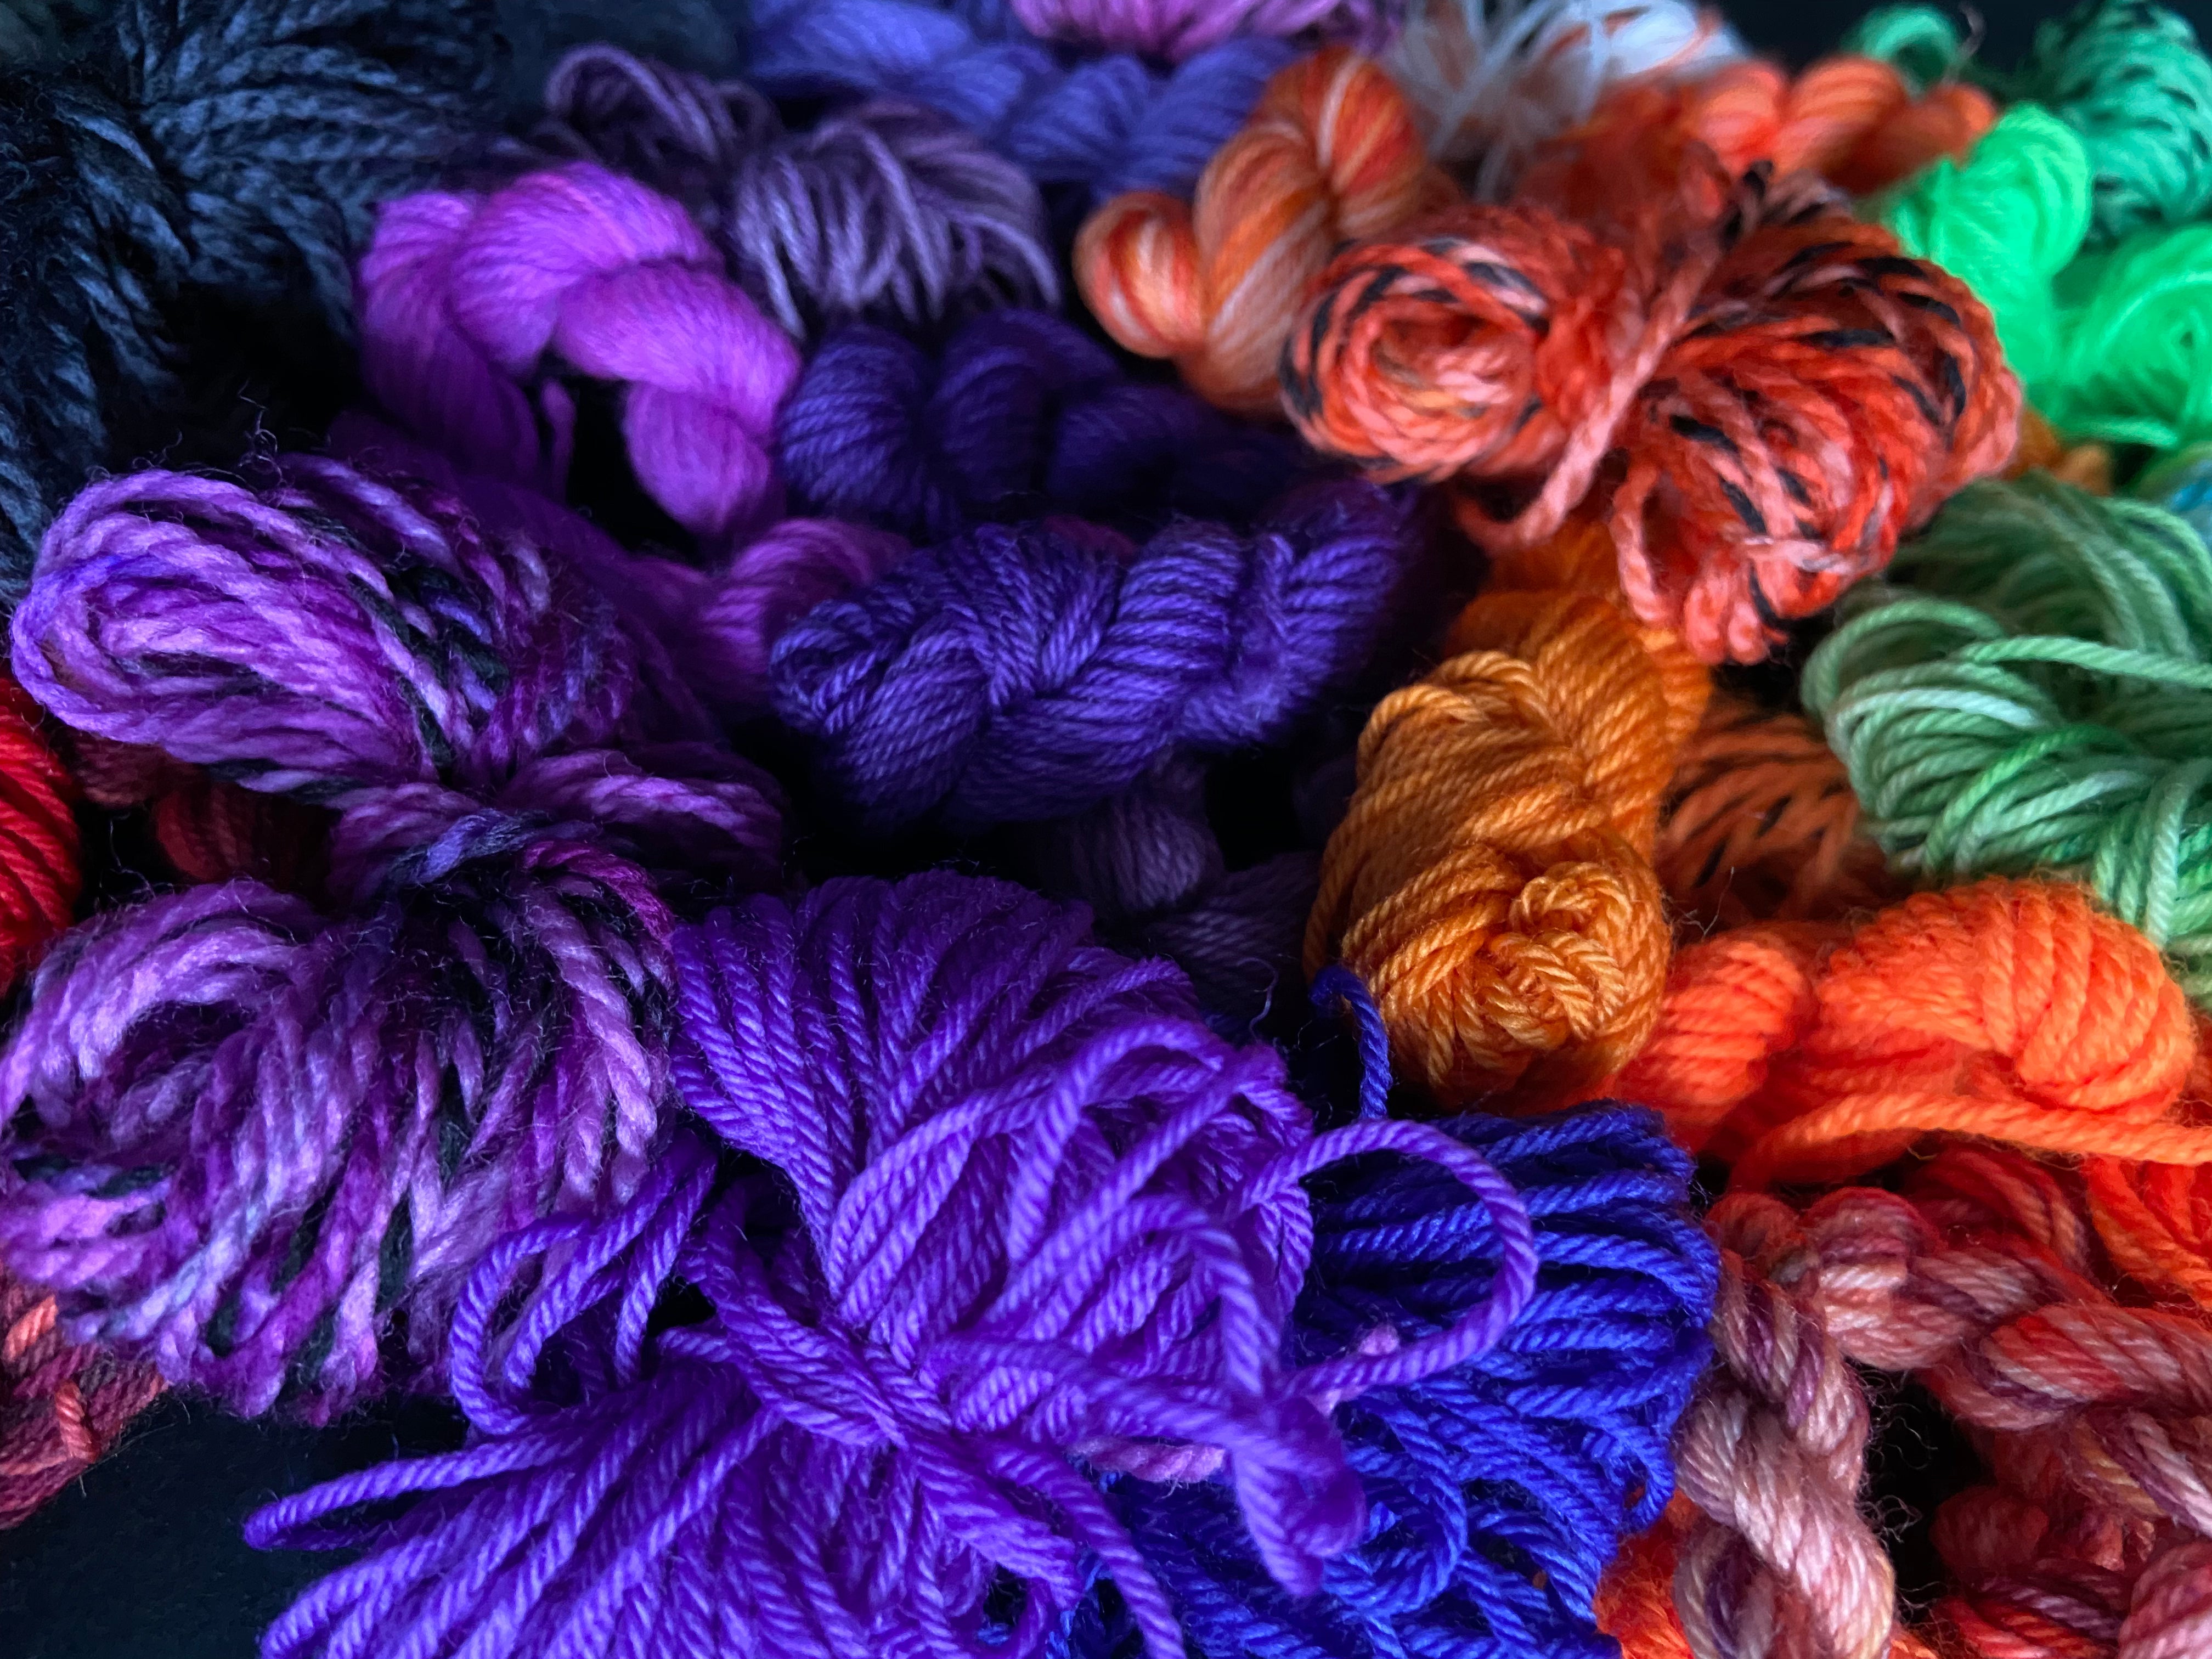 Monster Mash - Random Halloween Mix Hand Dyed Yarn Creativity Pack